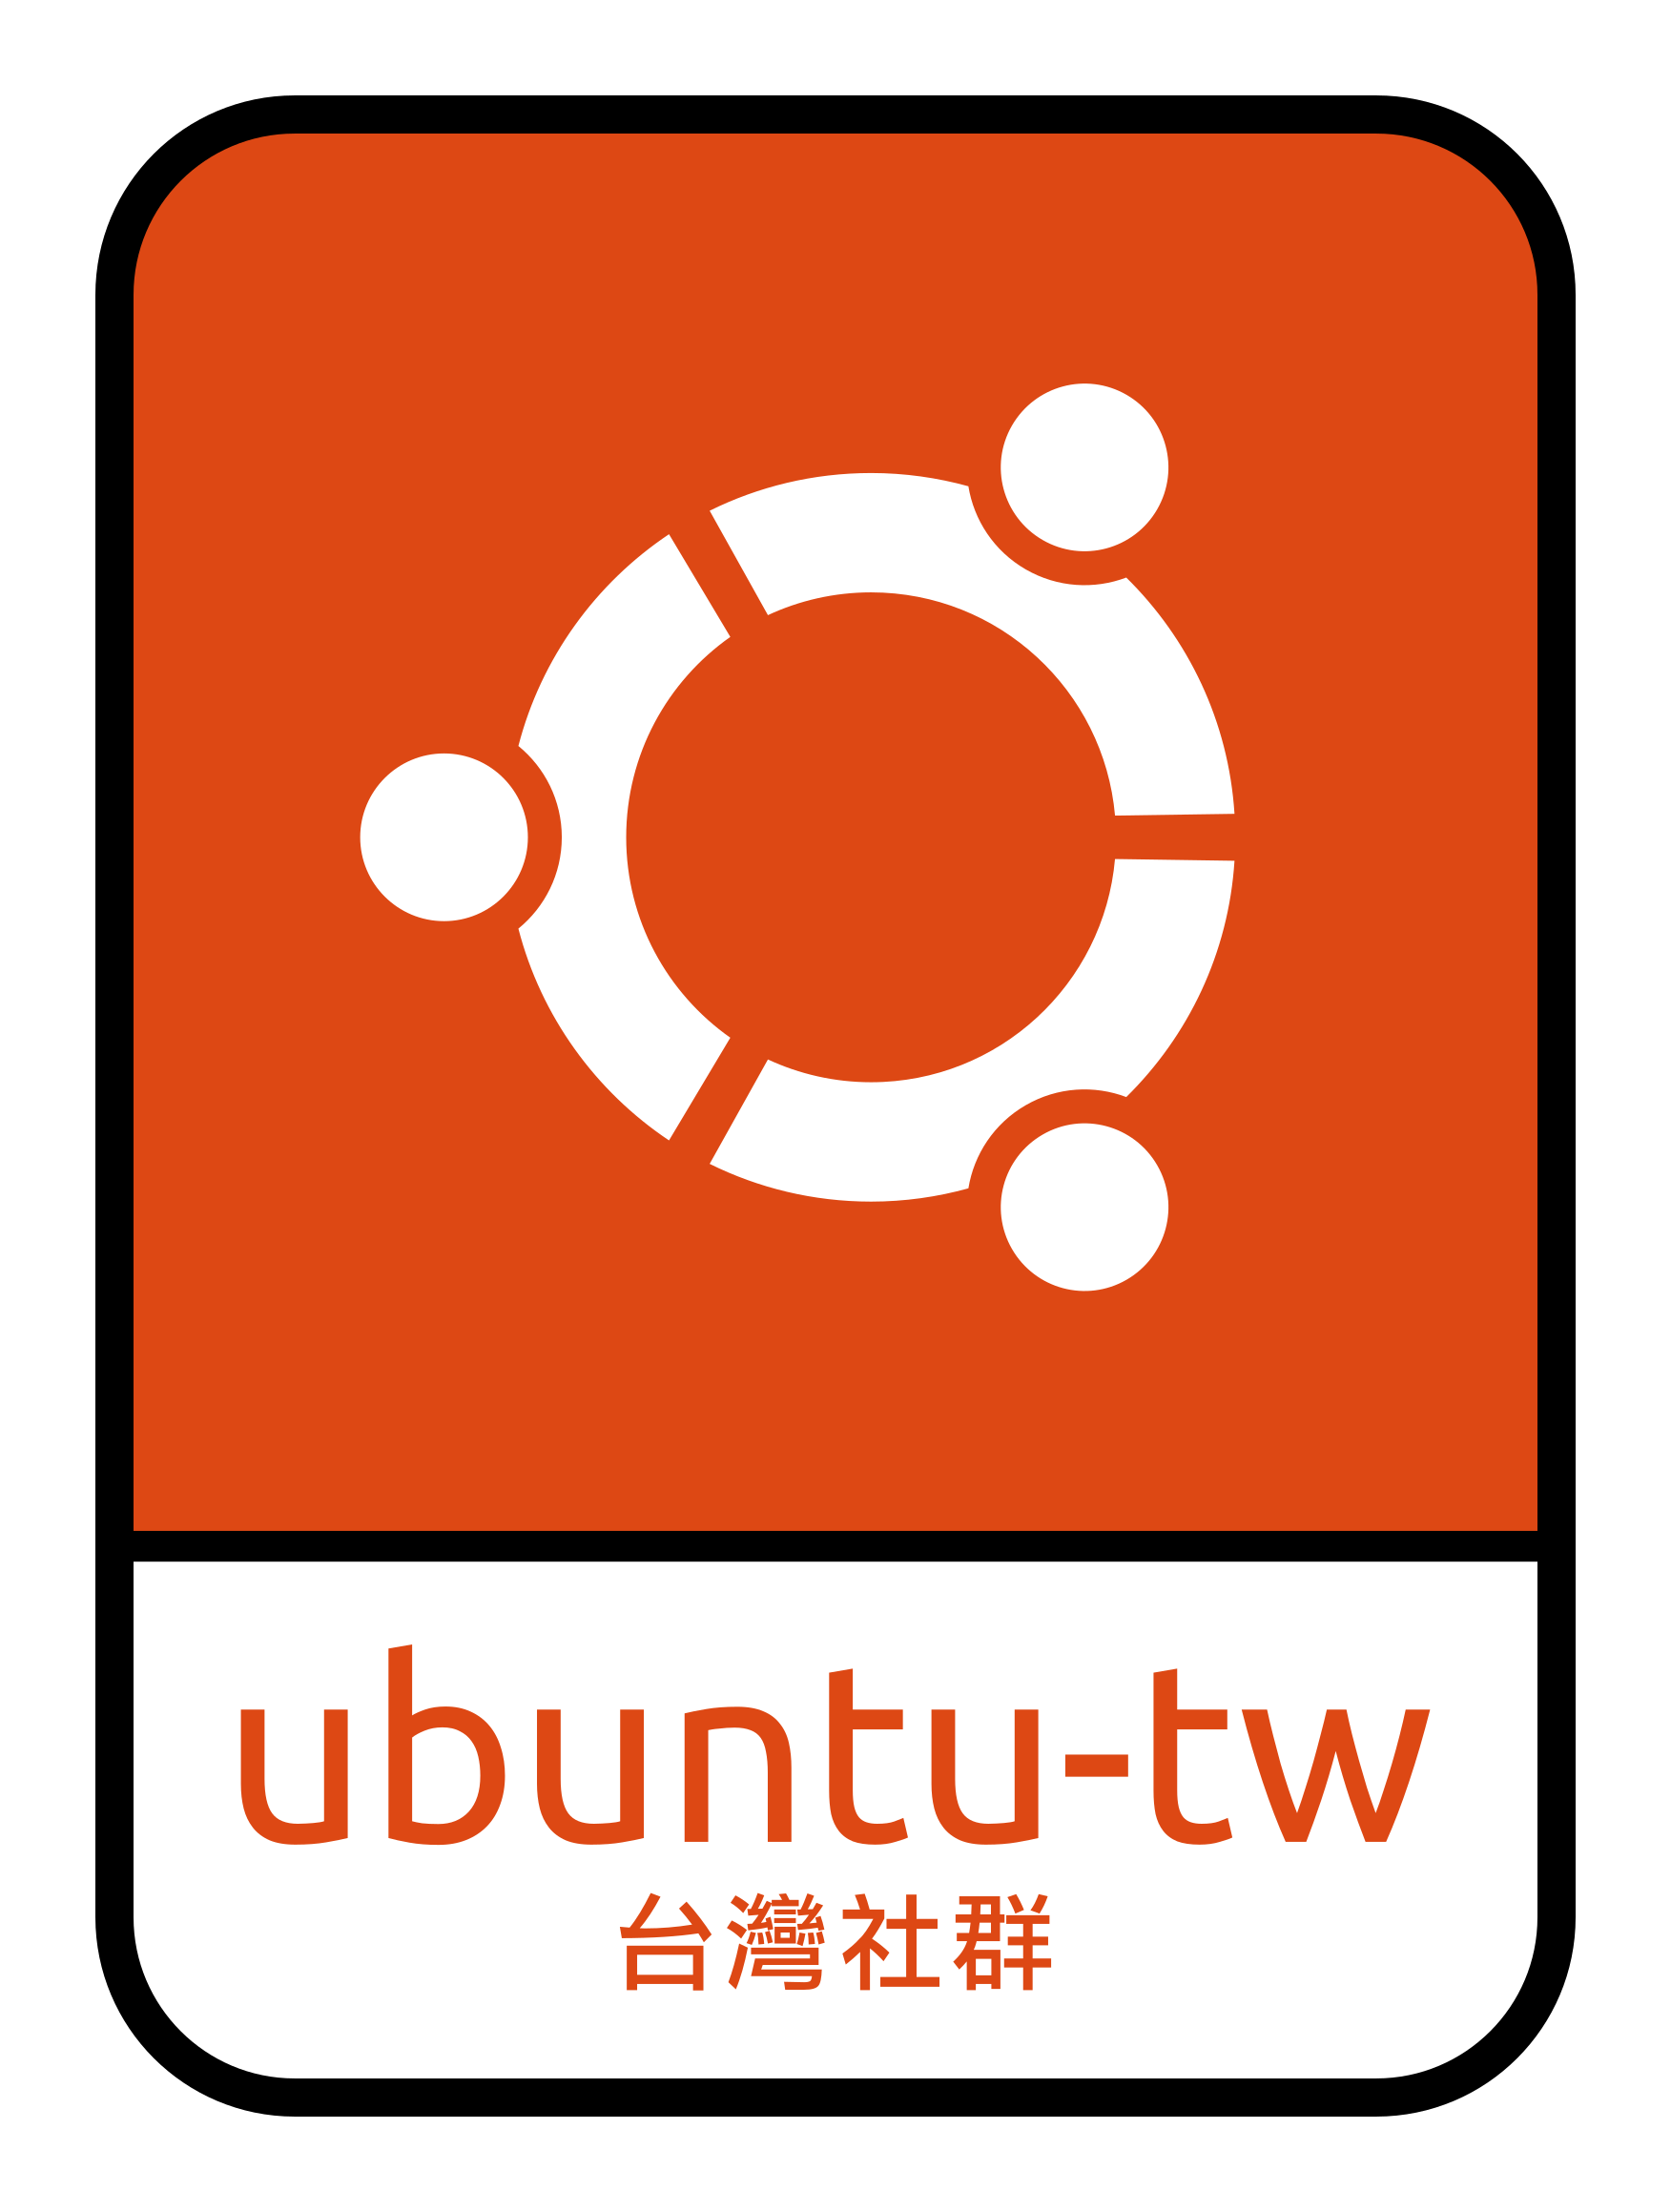 Ubuntu-TW (Ubuntu 台灣社群)